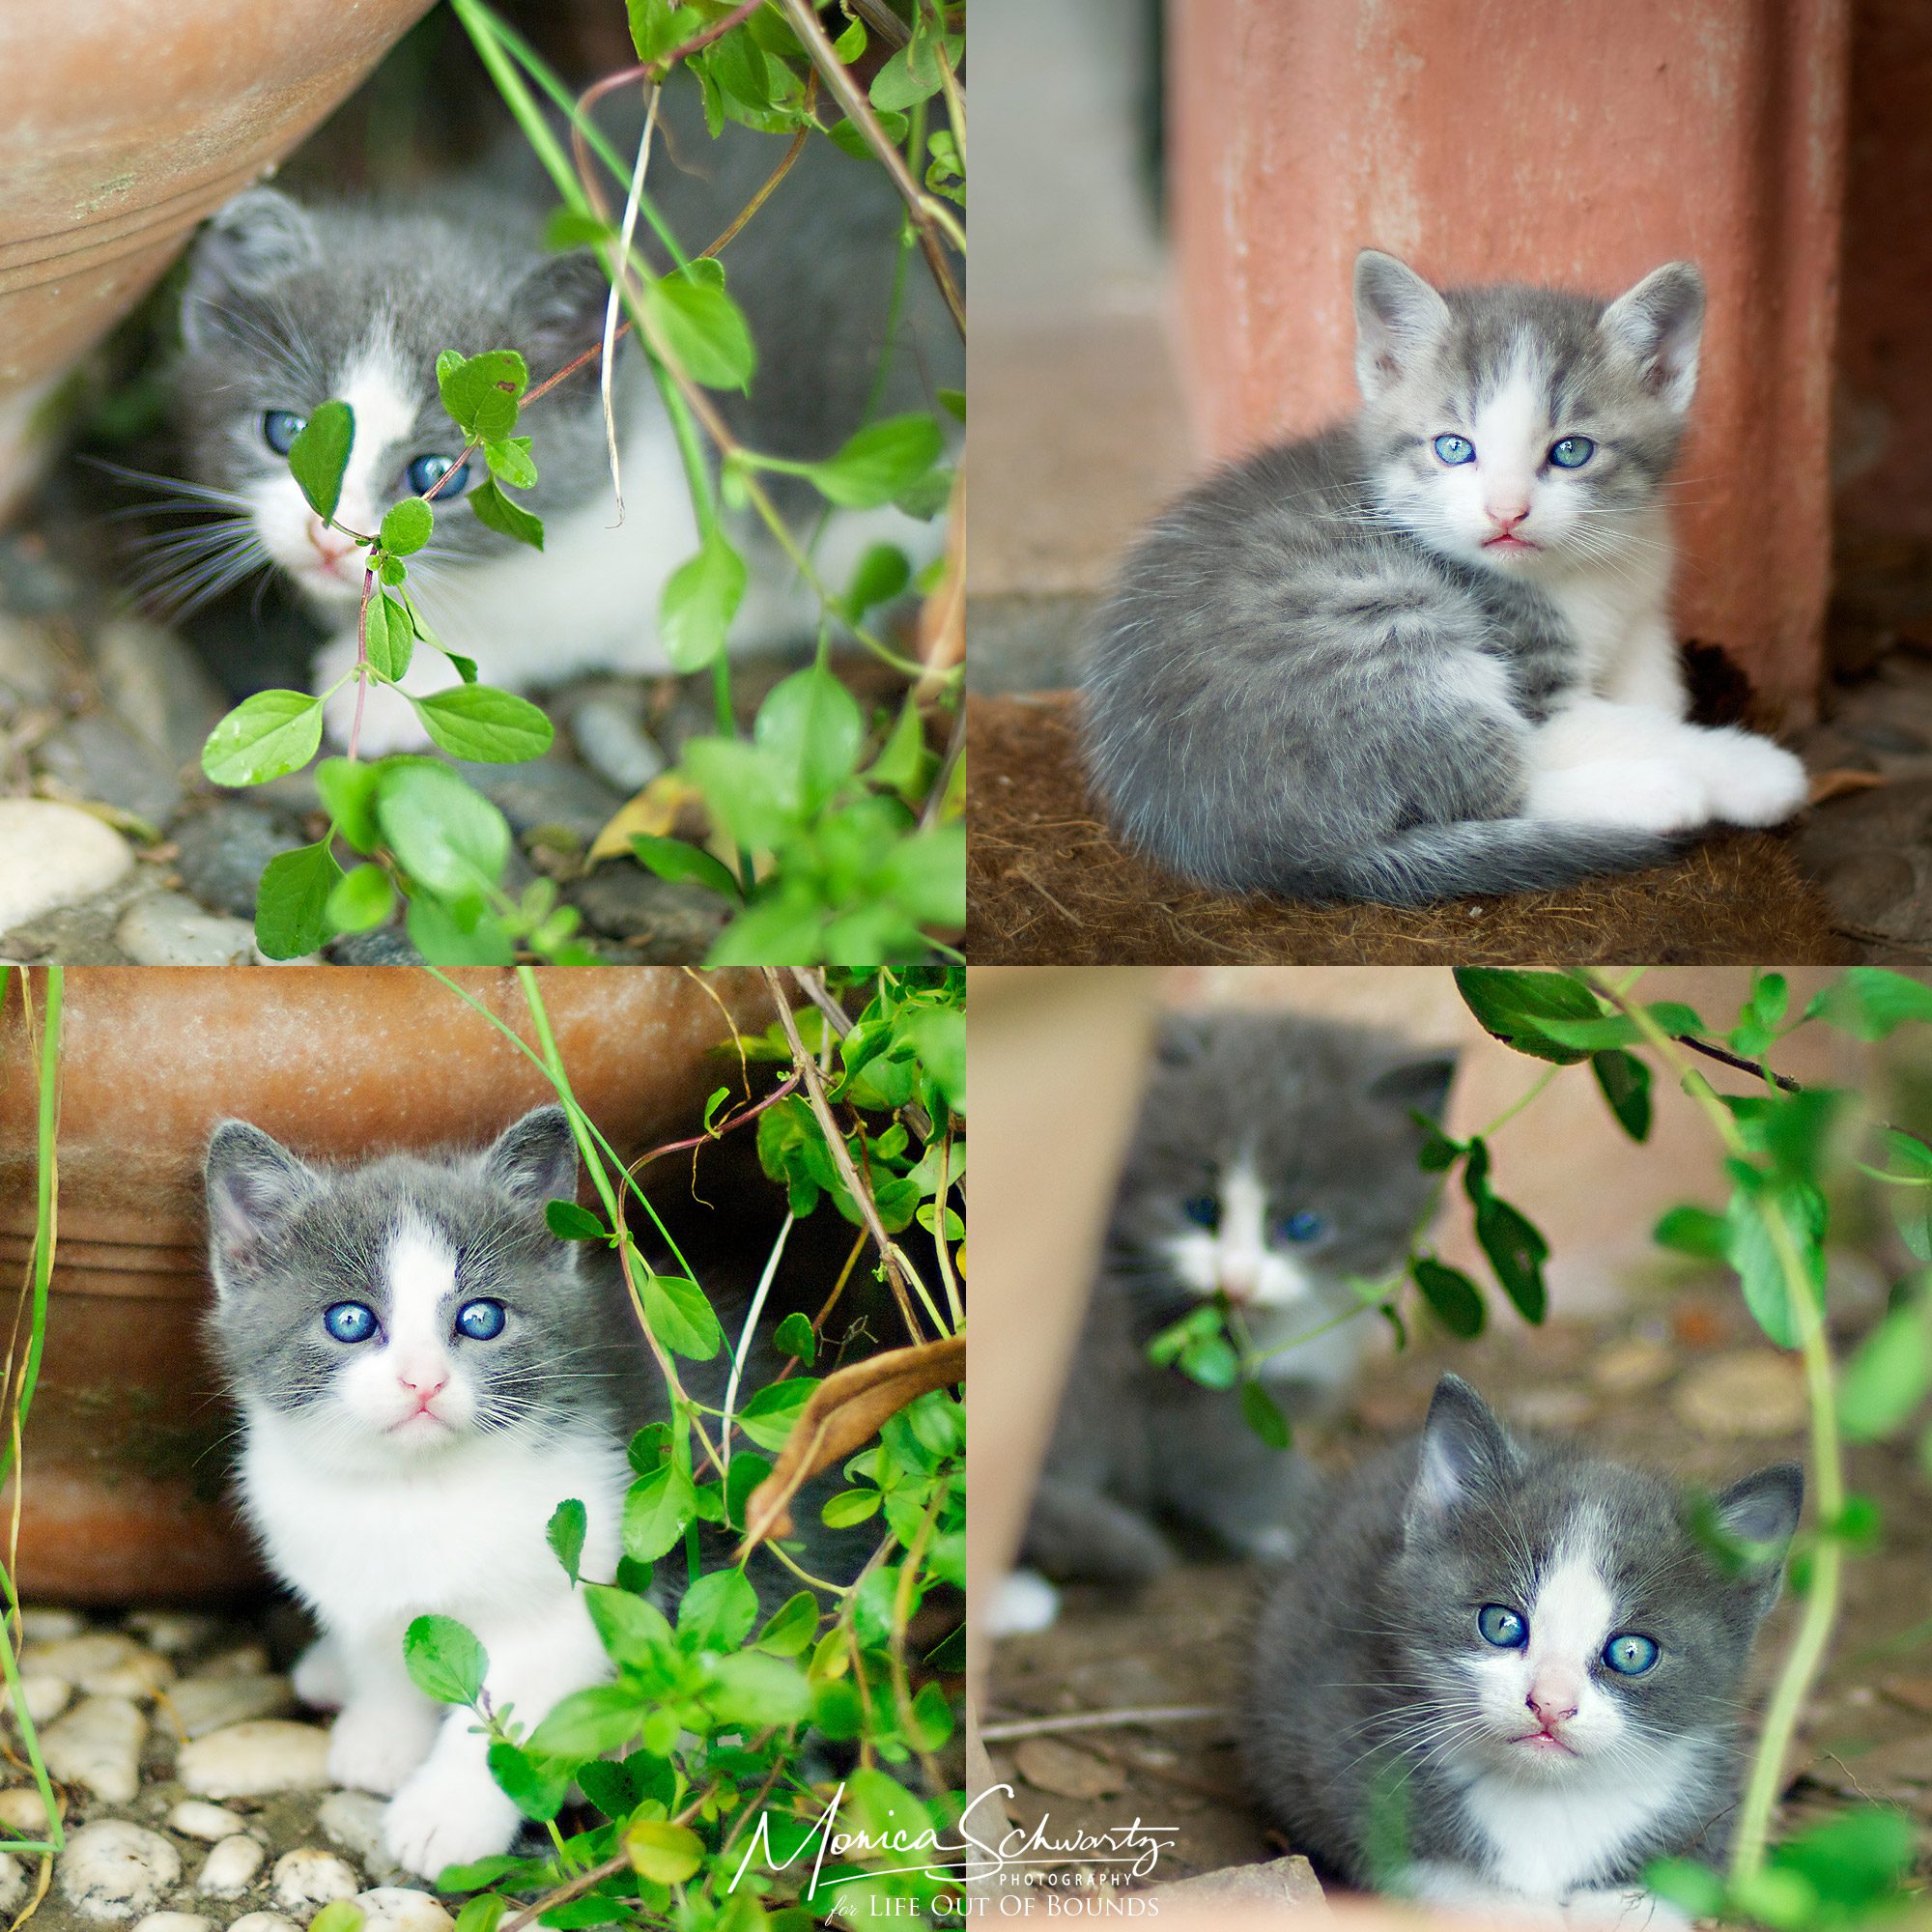 Cute-little-kittens-playing-hide-and-seek-in-the-garden